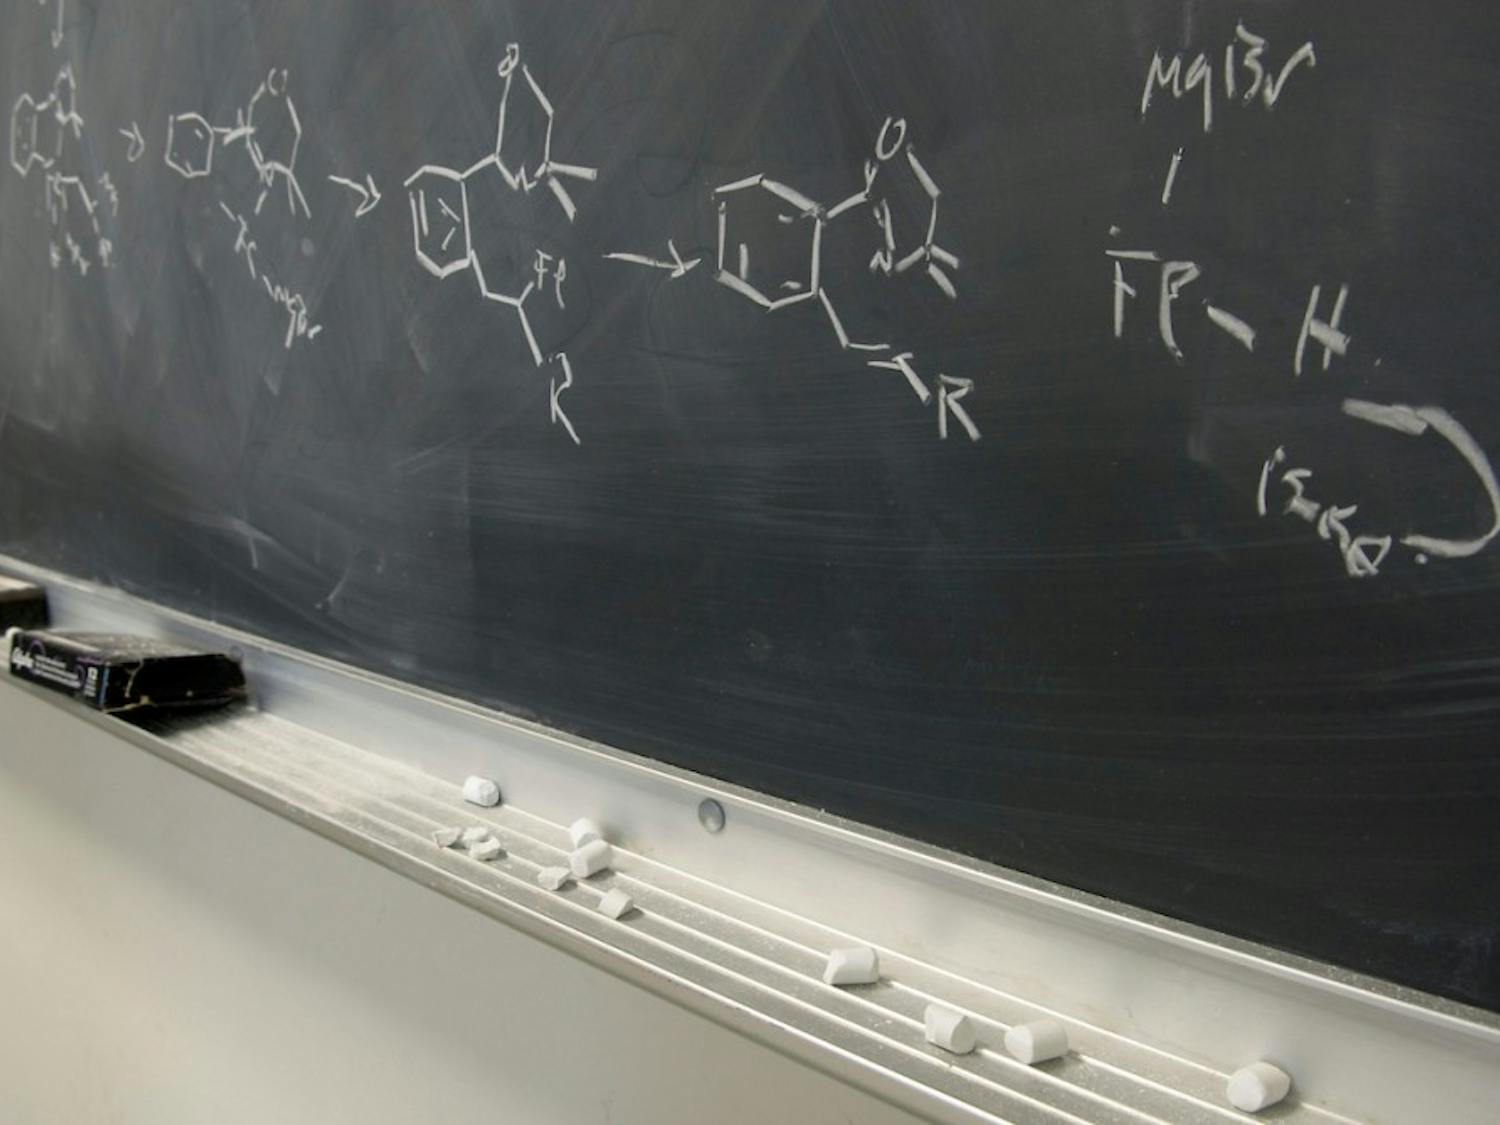 chemistry_chalkboard08_1348